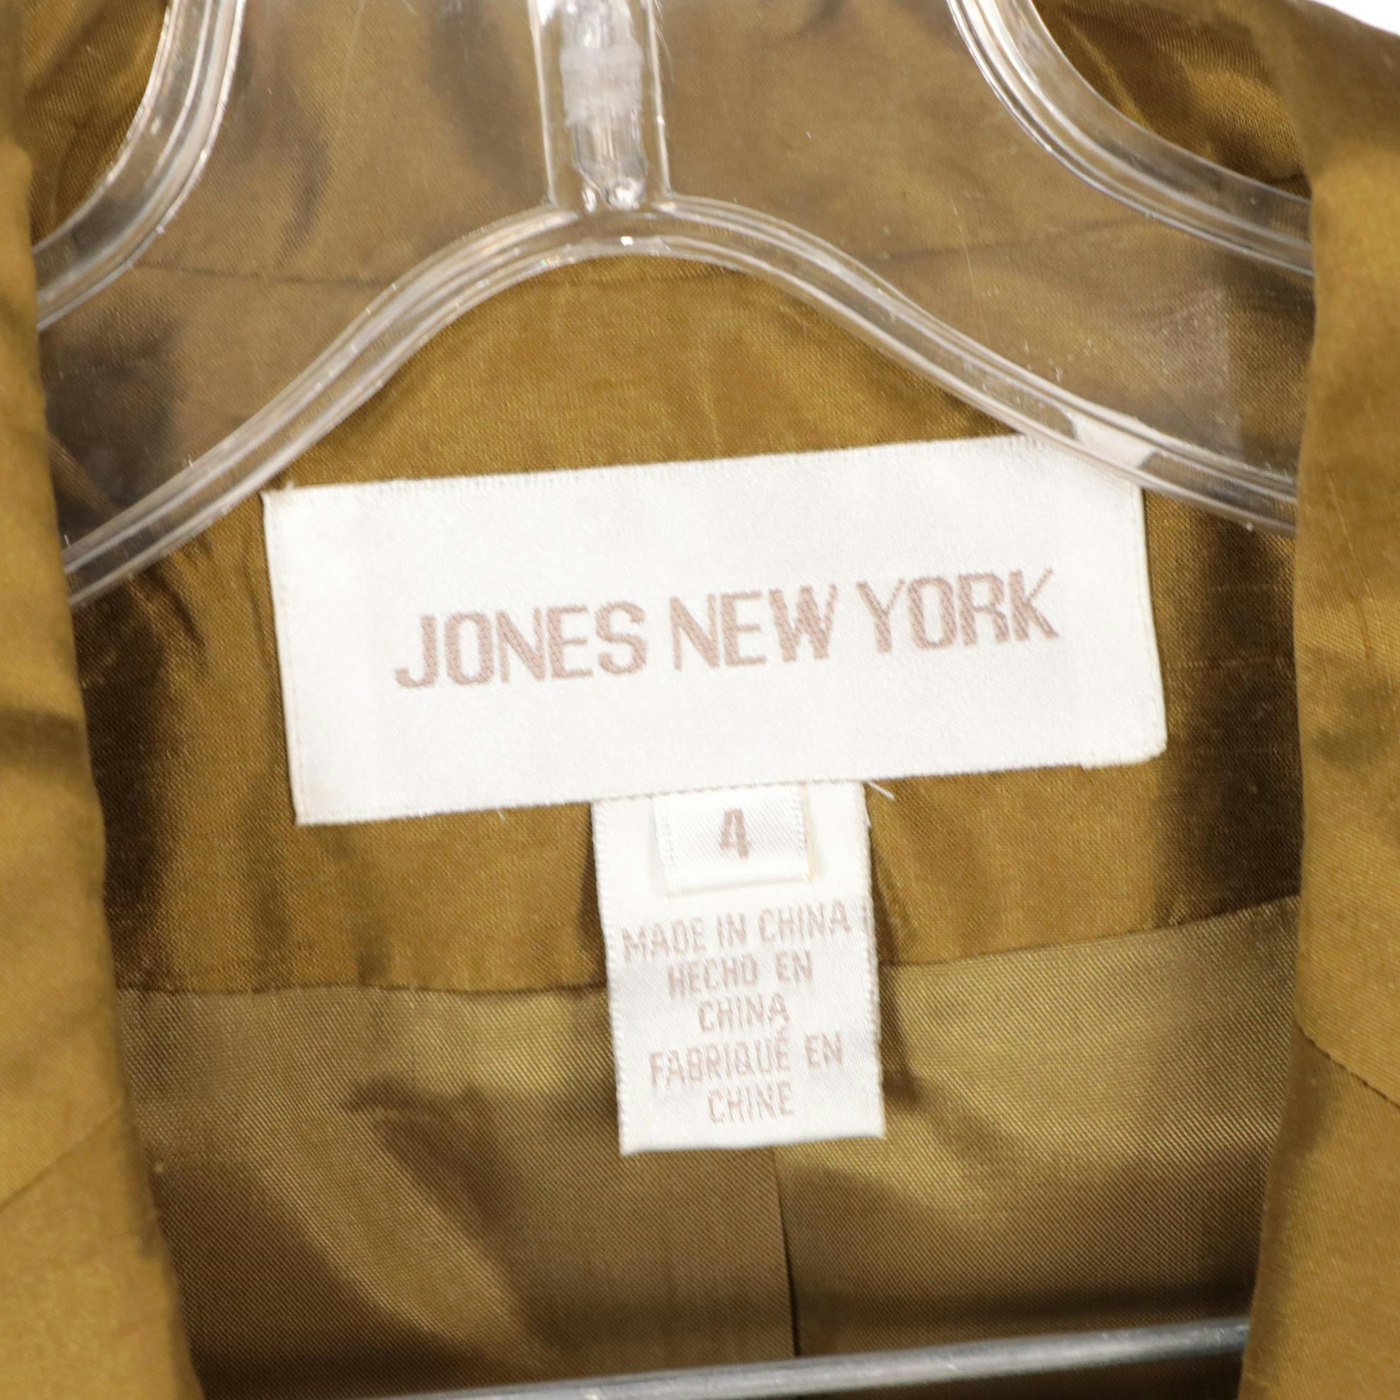 Jones New York Silk Pant Set, Dosa Pant, Emanuel Ungaro and Other Pant ...